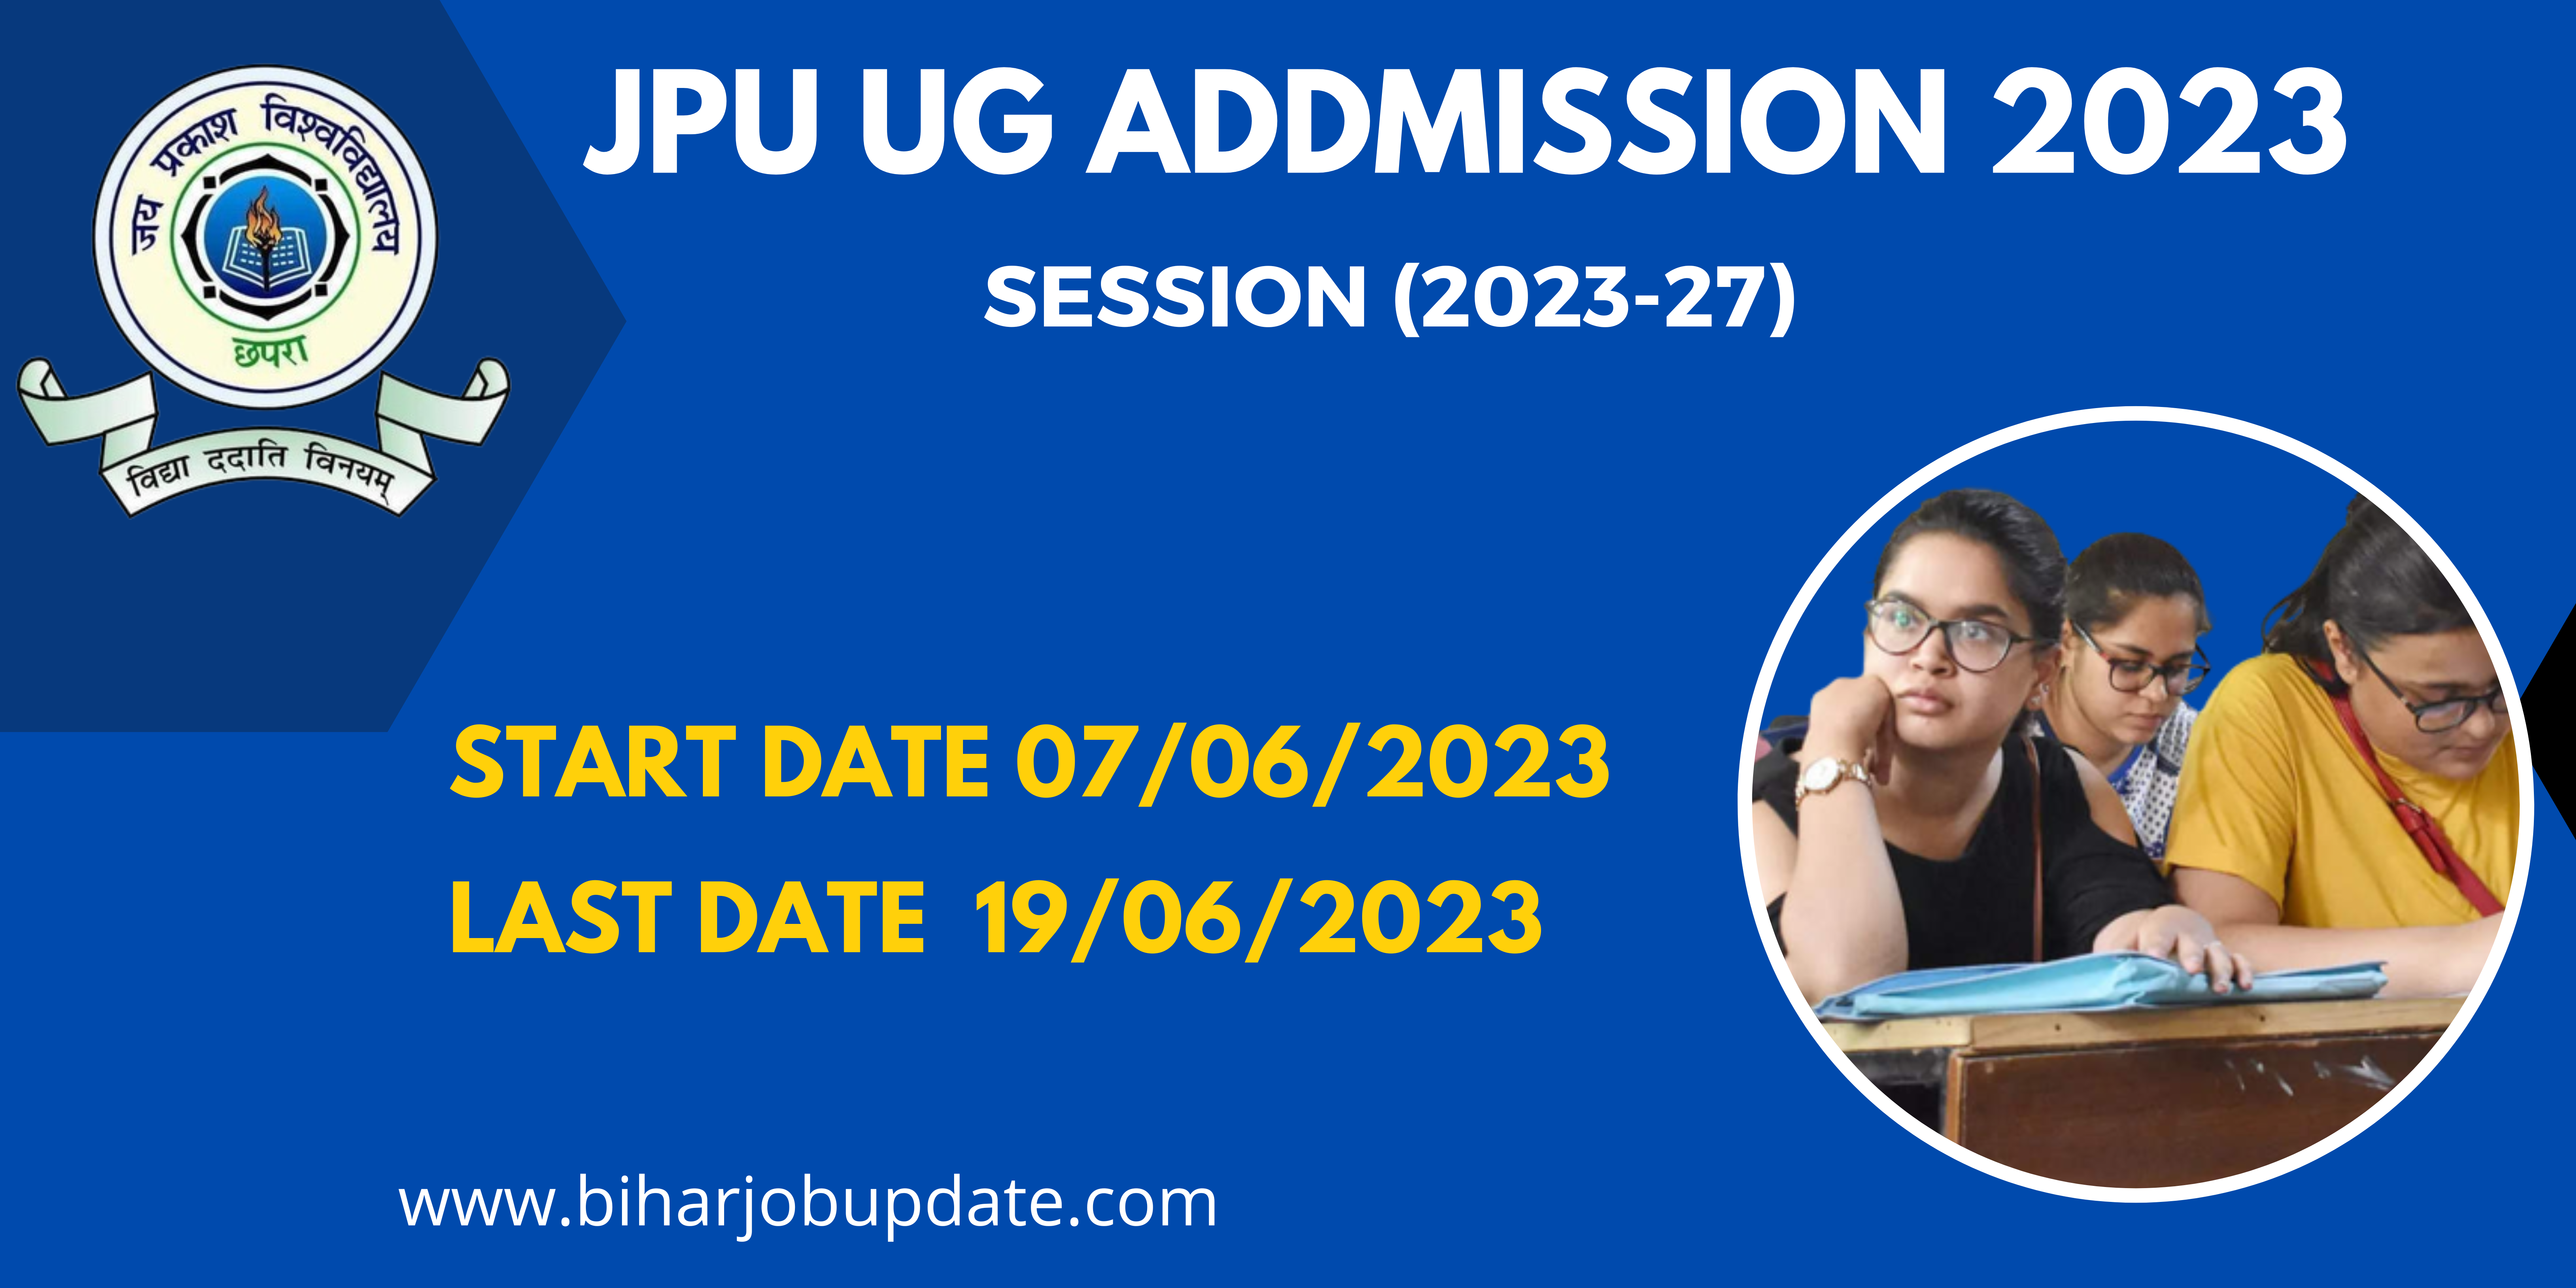 JPU UG addmission 2023